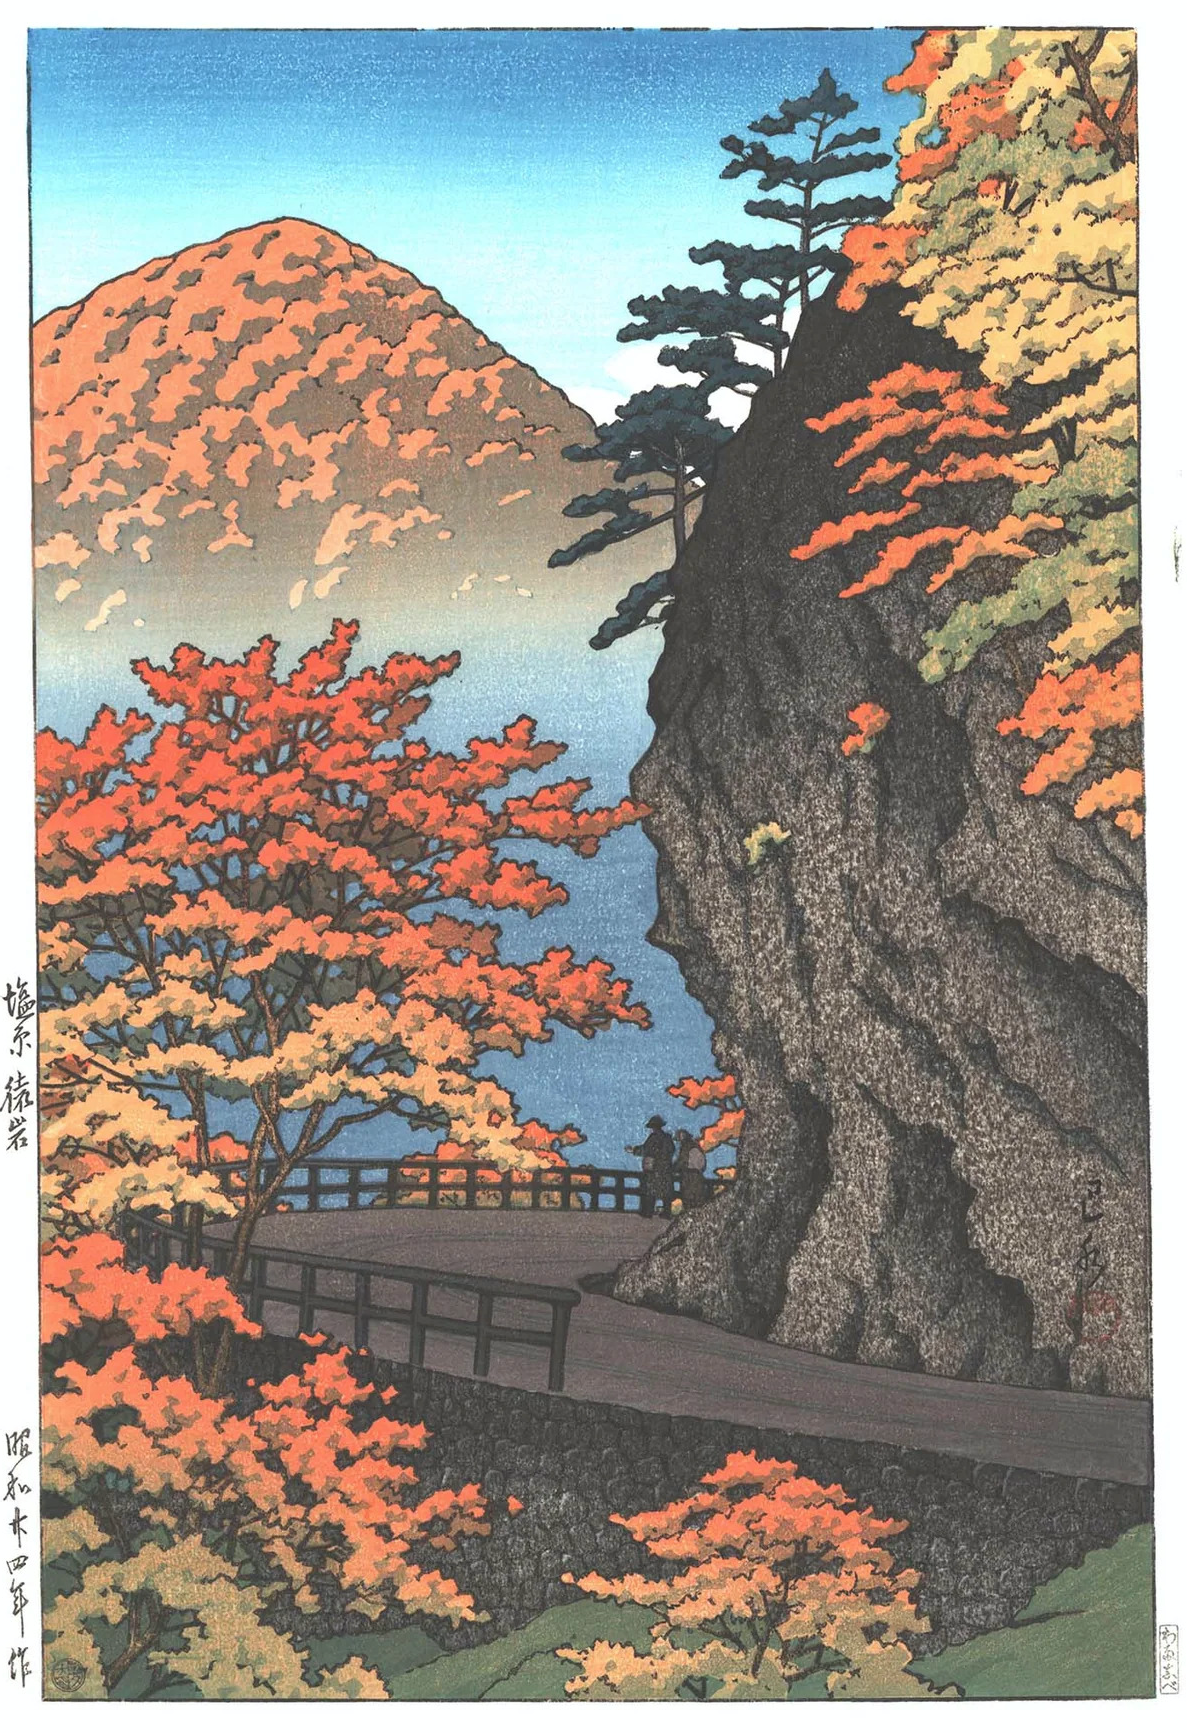 Autumn at Saruiwa, Shiobara by Hasui Kawase - 1949 - 38 x 24.4 cm private collection